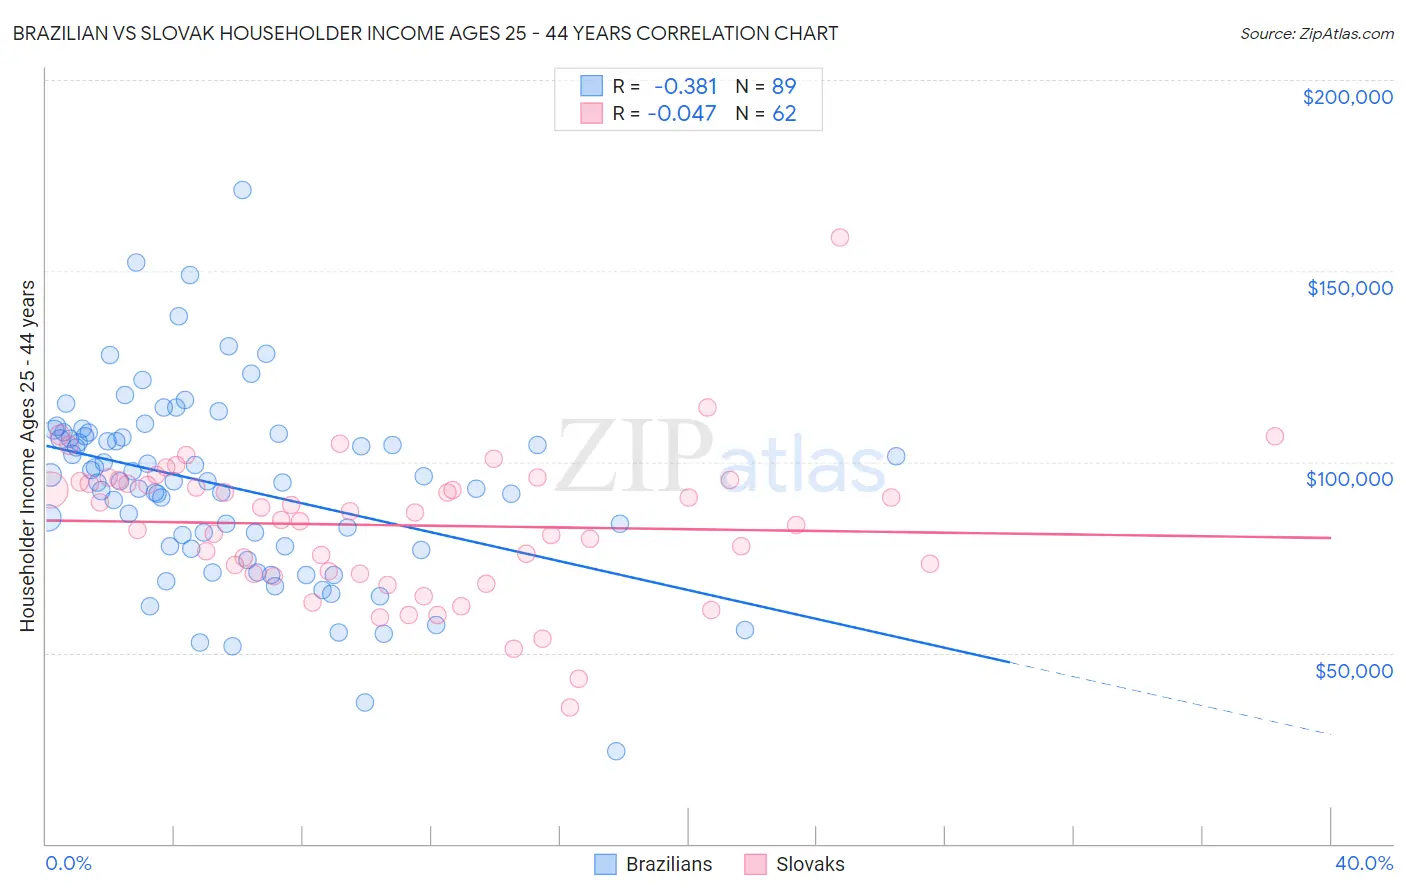 Brazilian vs Slovak Householder Income Ages 25 - 44 years